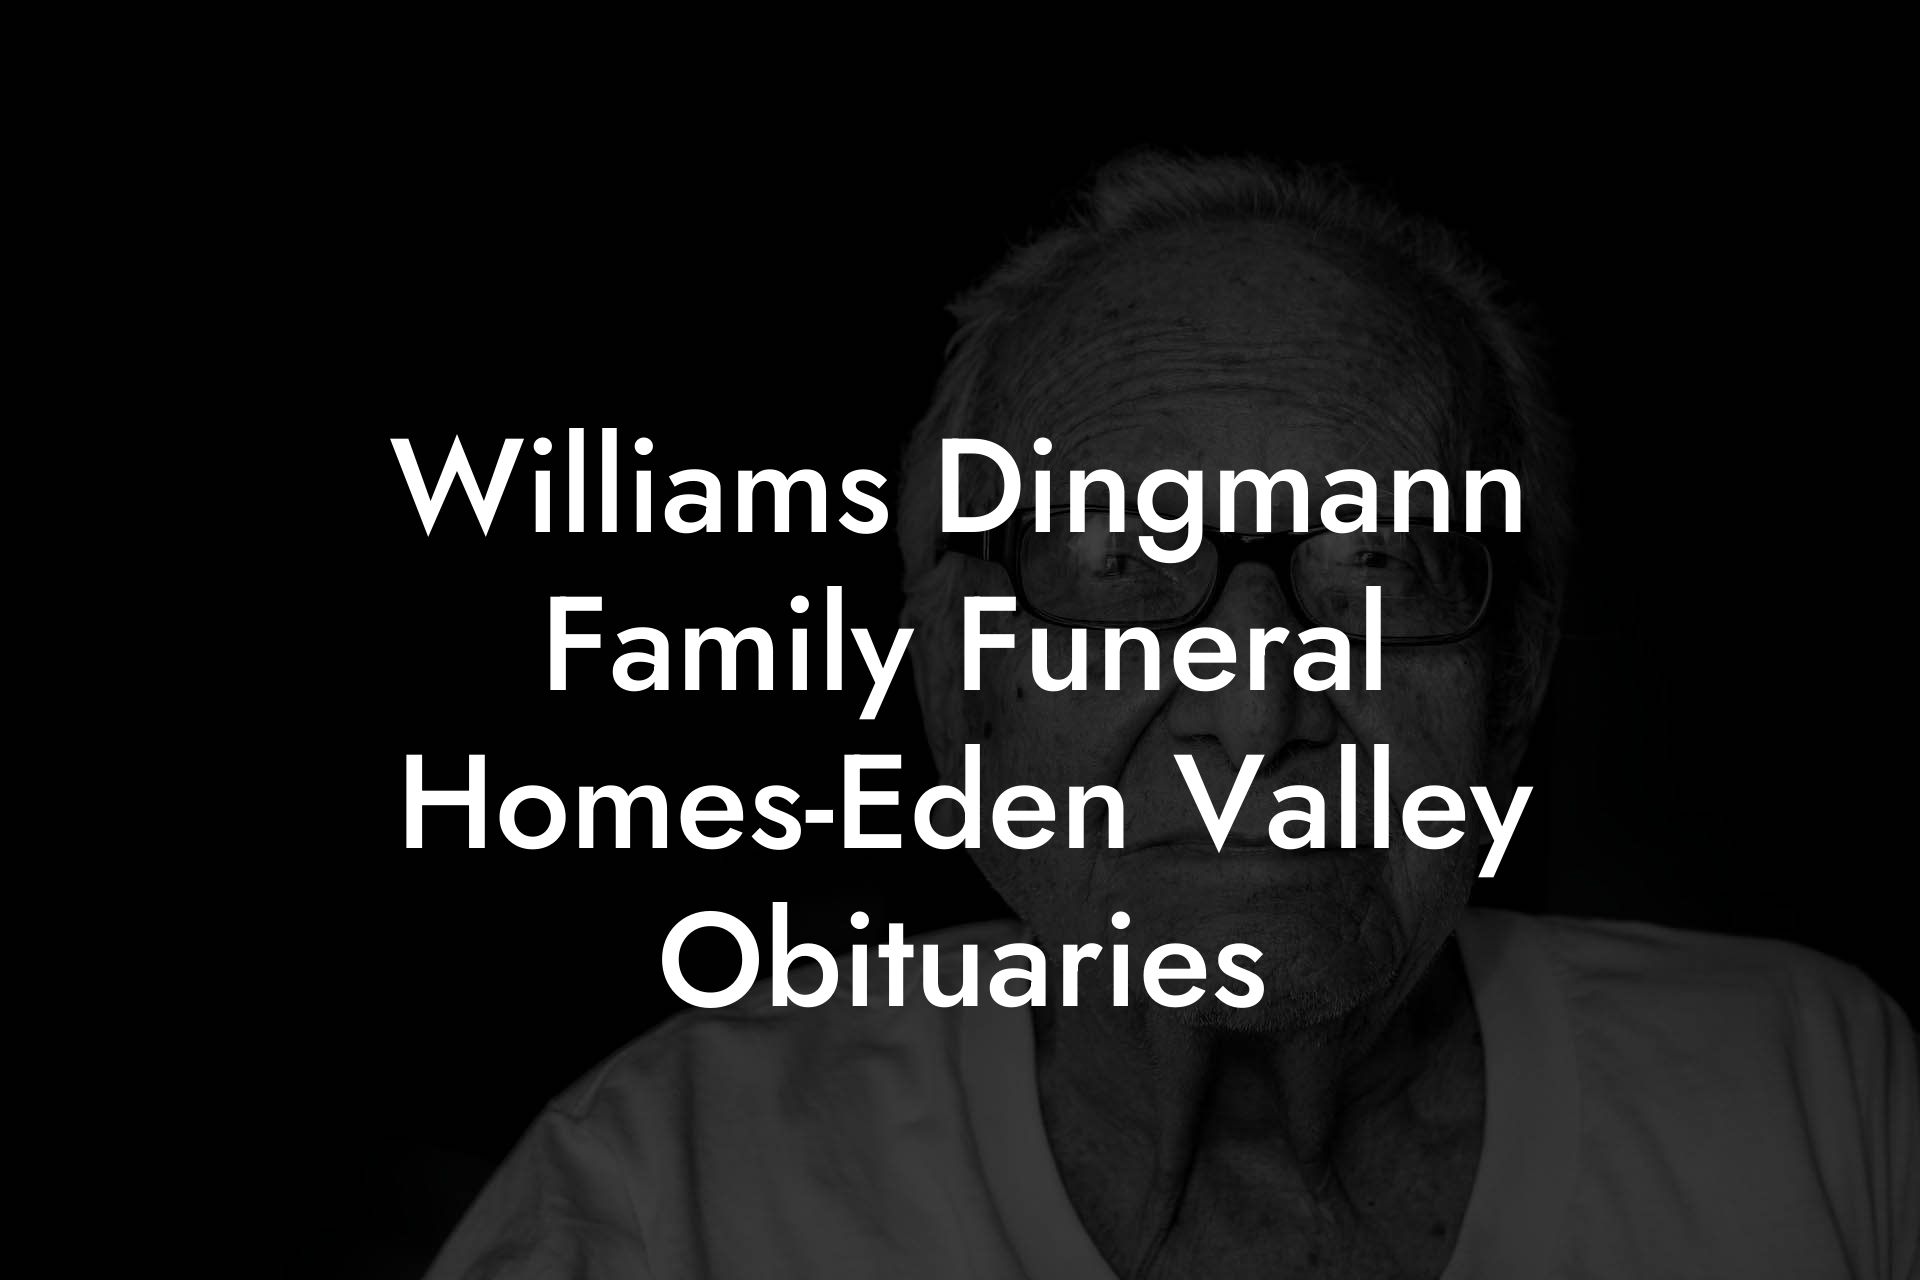 Williams Dingmann Family Funeral Homes-Eden Valley Obituaries